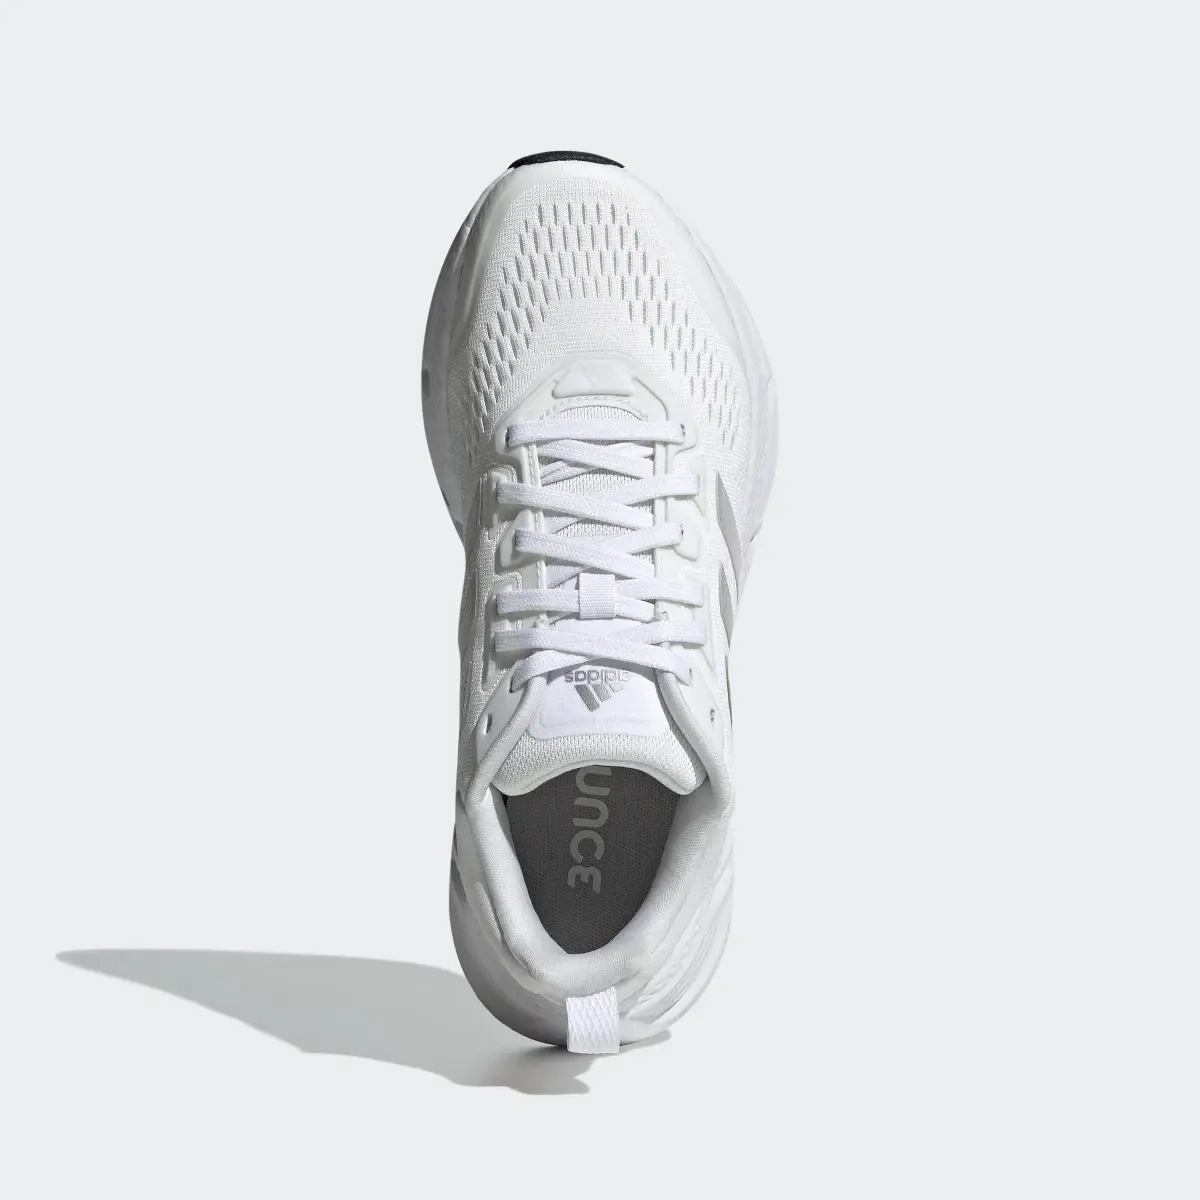 Adidas Scarpe Questar. 3